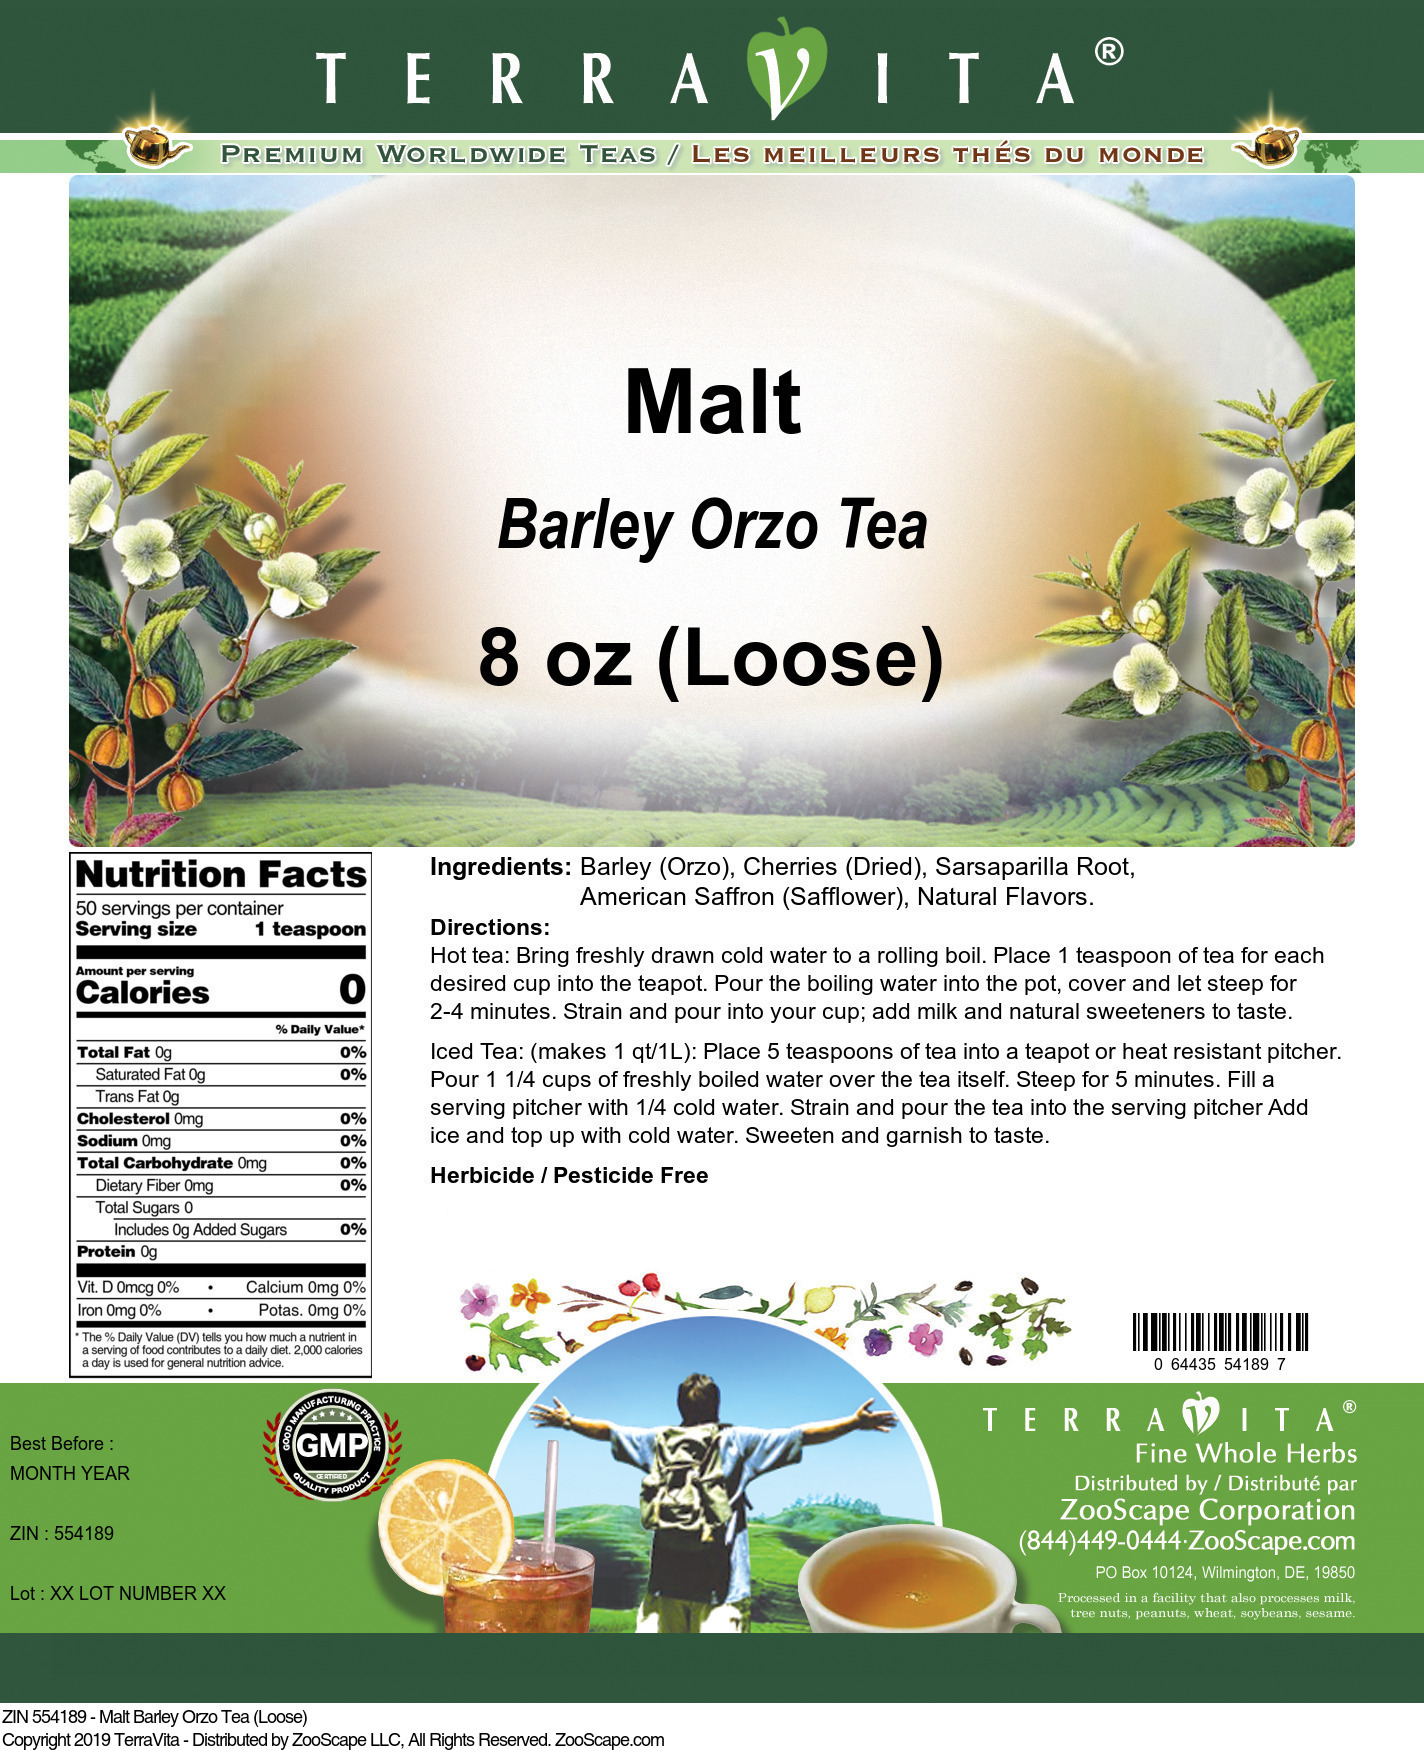 Malt Barley Orzo Tea (Loose) - Label